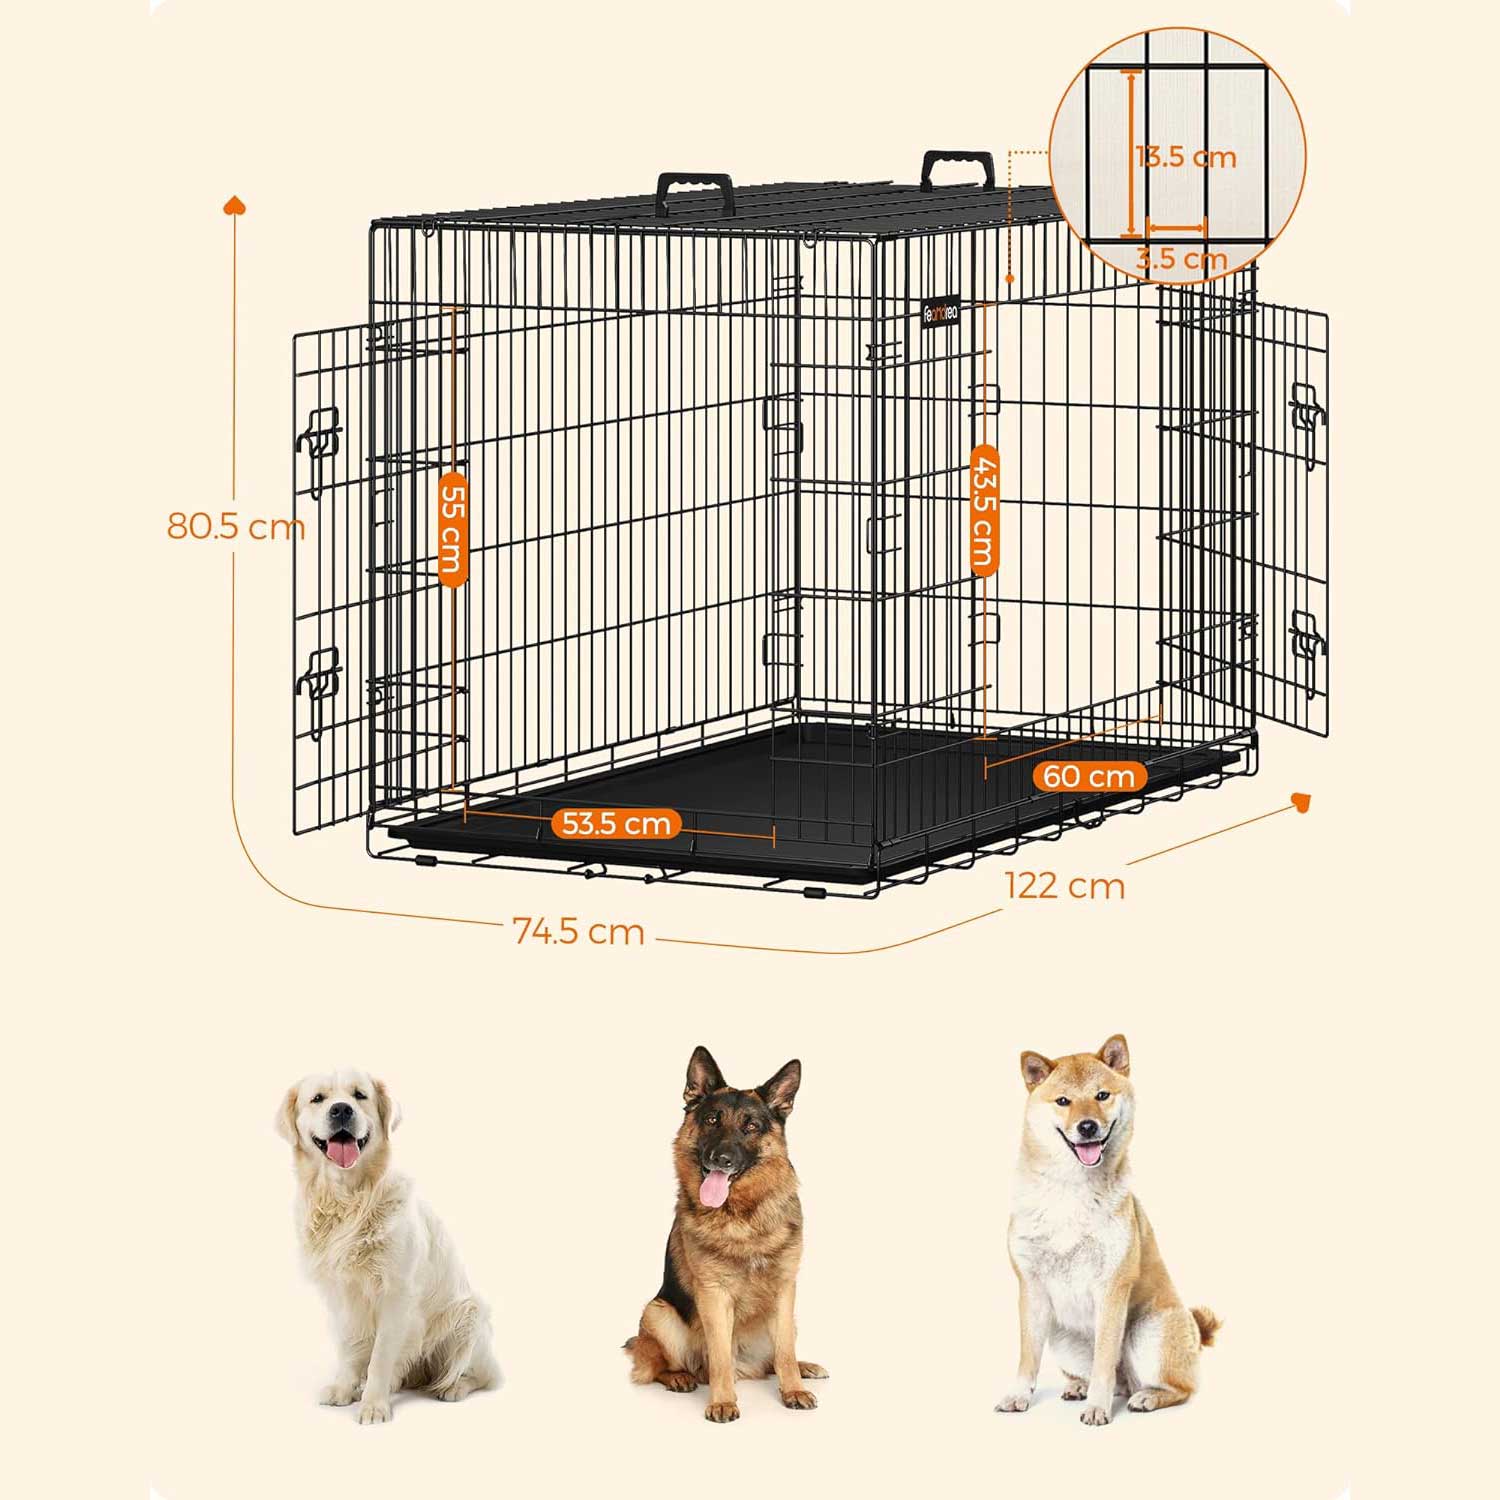 Hundekäfig, Hundebox, zusammenklappbar, transportabel, 2 Türen, 122 x 74,5 x 80,5 cm, schwarz